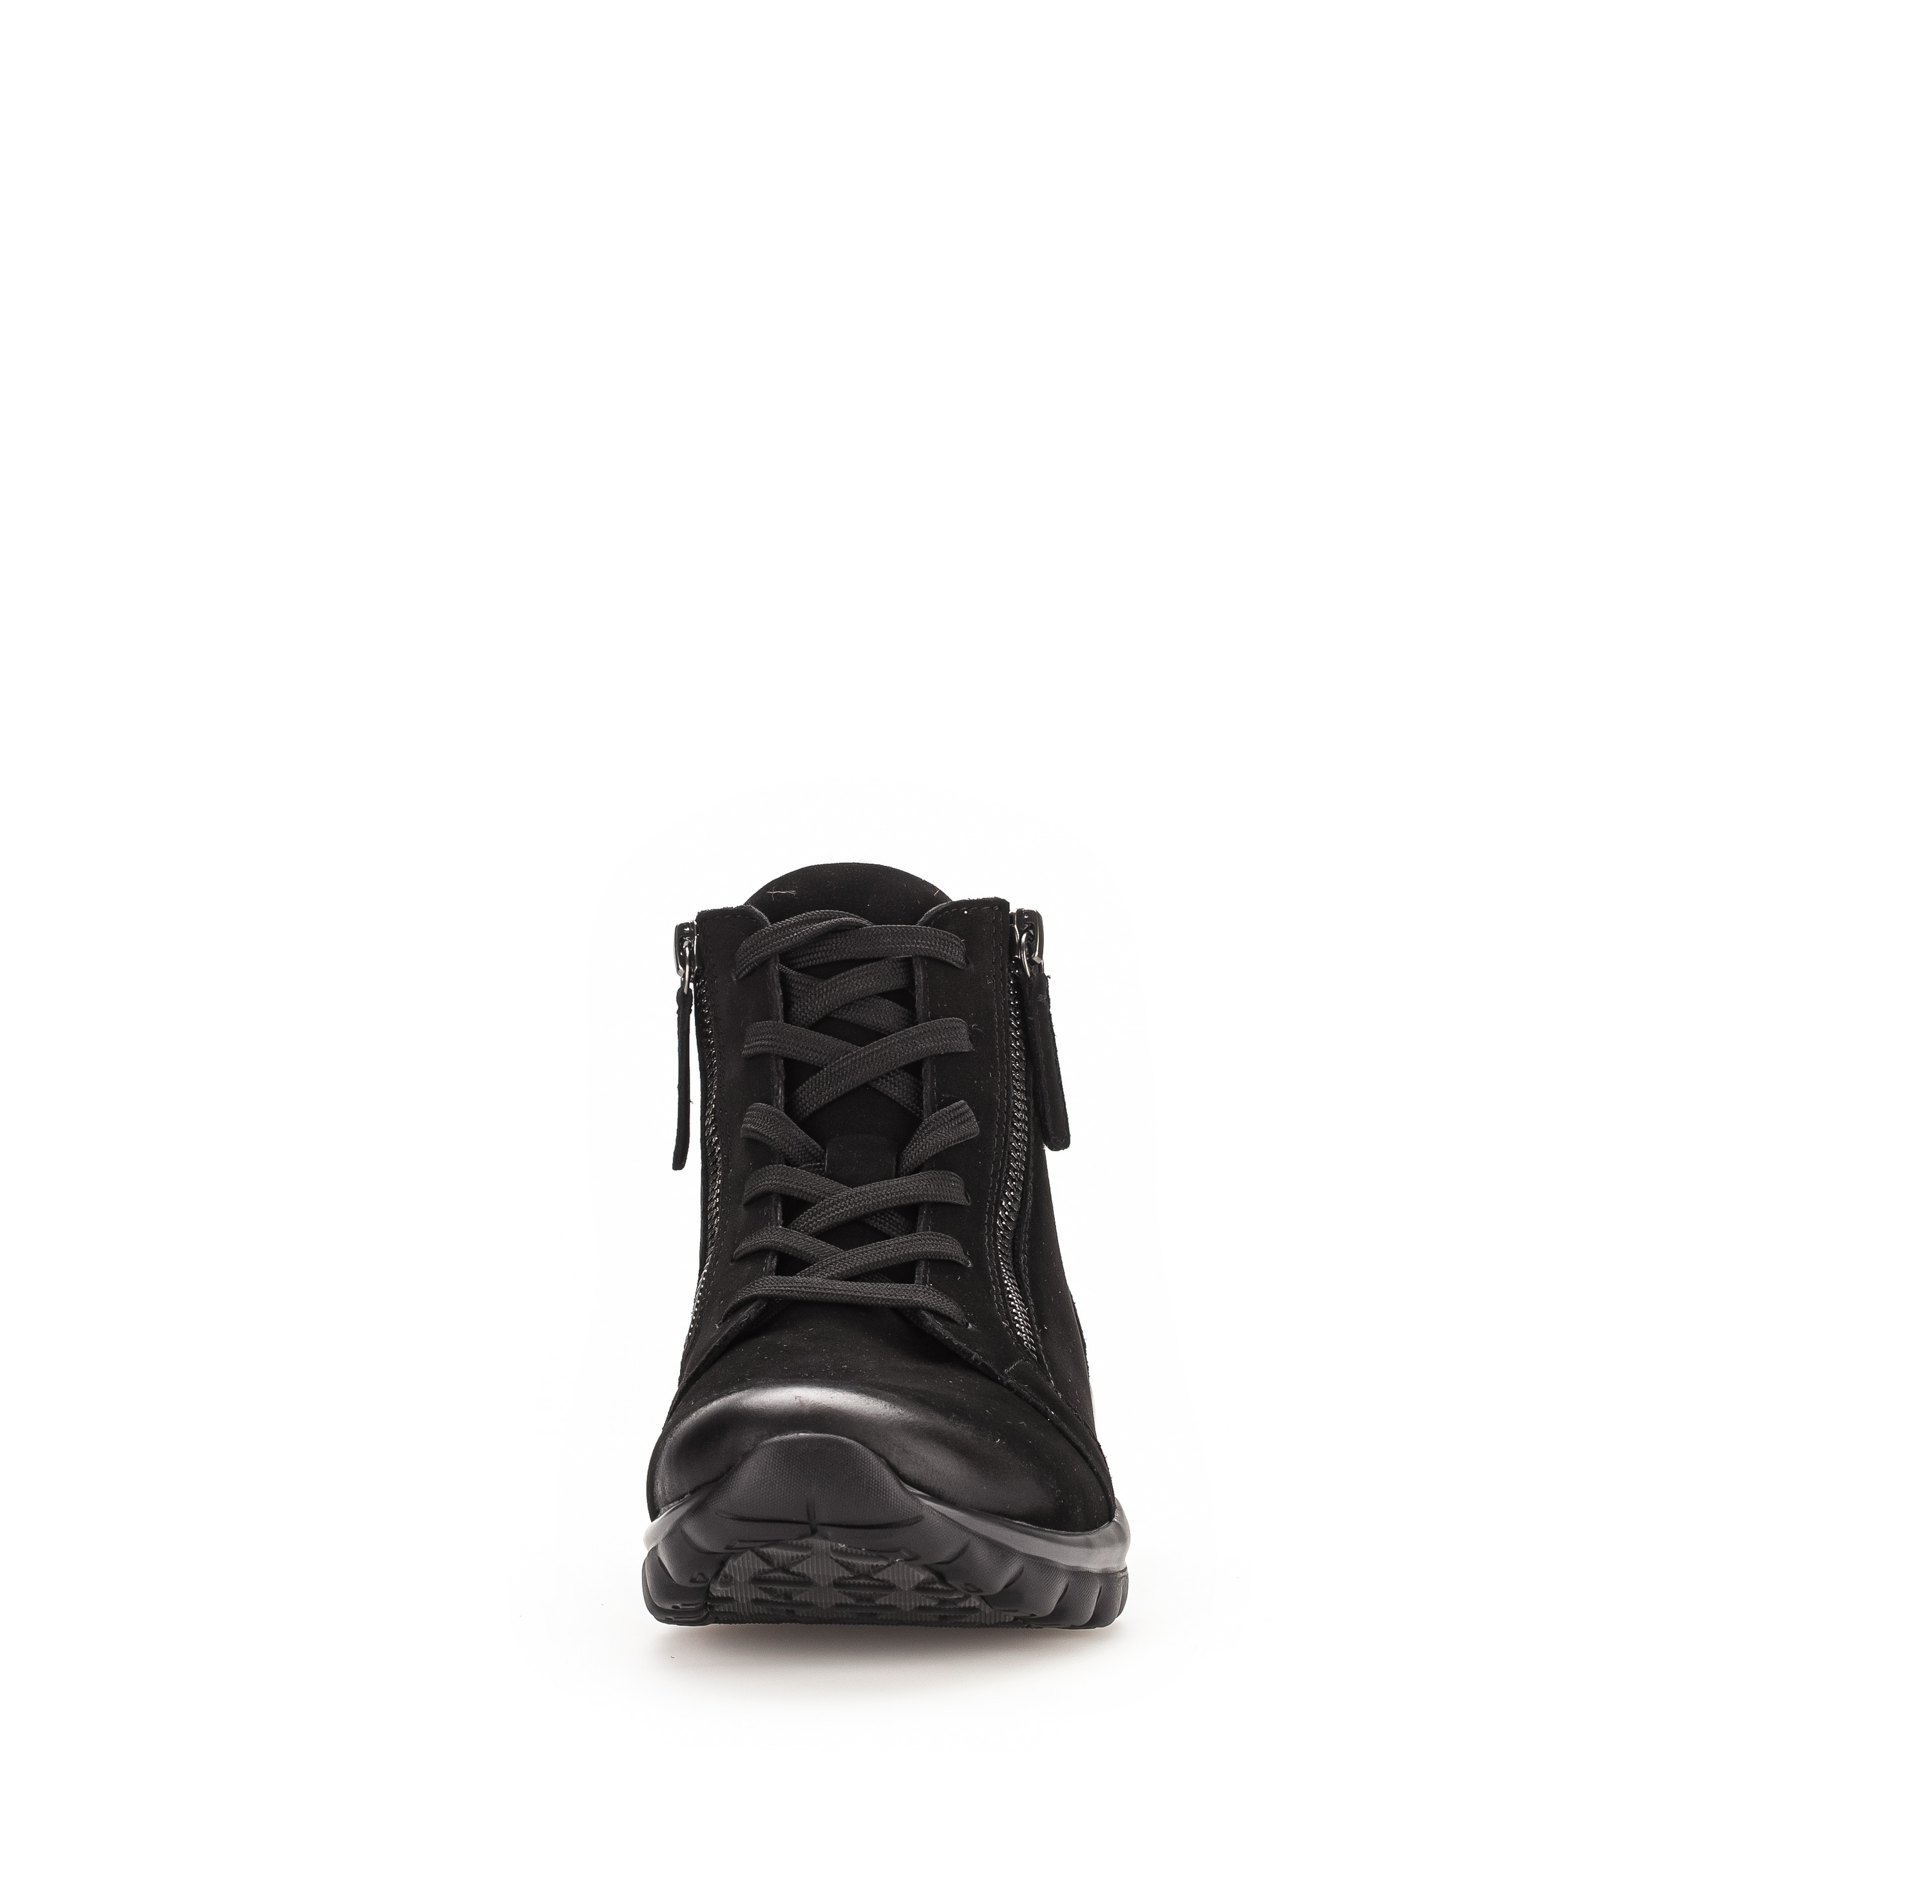 Gabor Shoes Stiefelette - Schwarz Leder